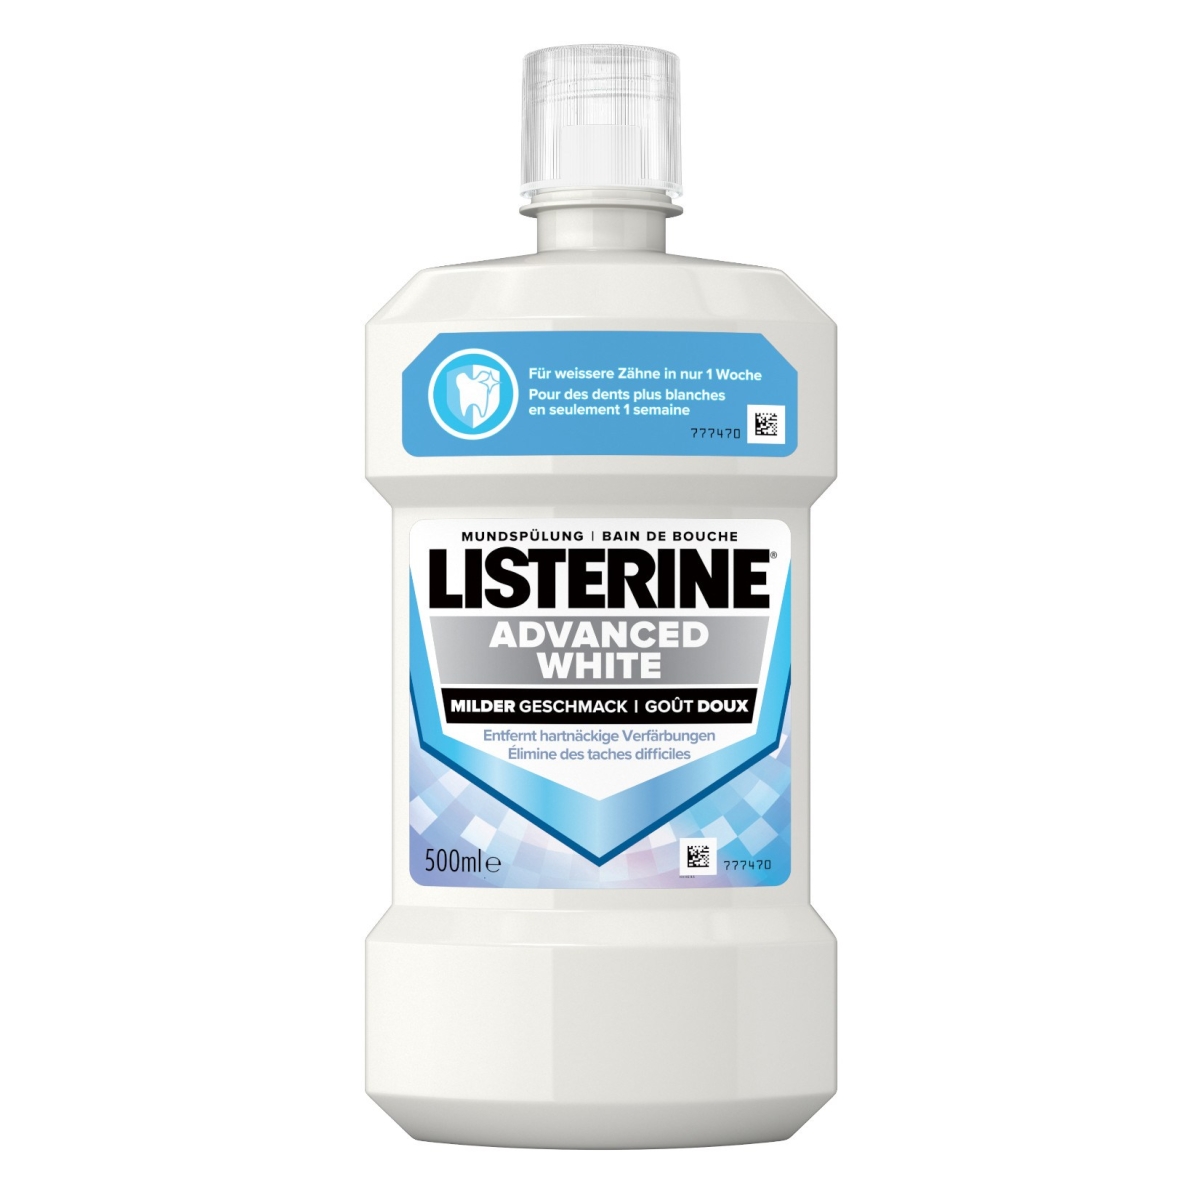 Listerine Advanced White Goud Deux Packshot